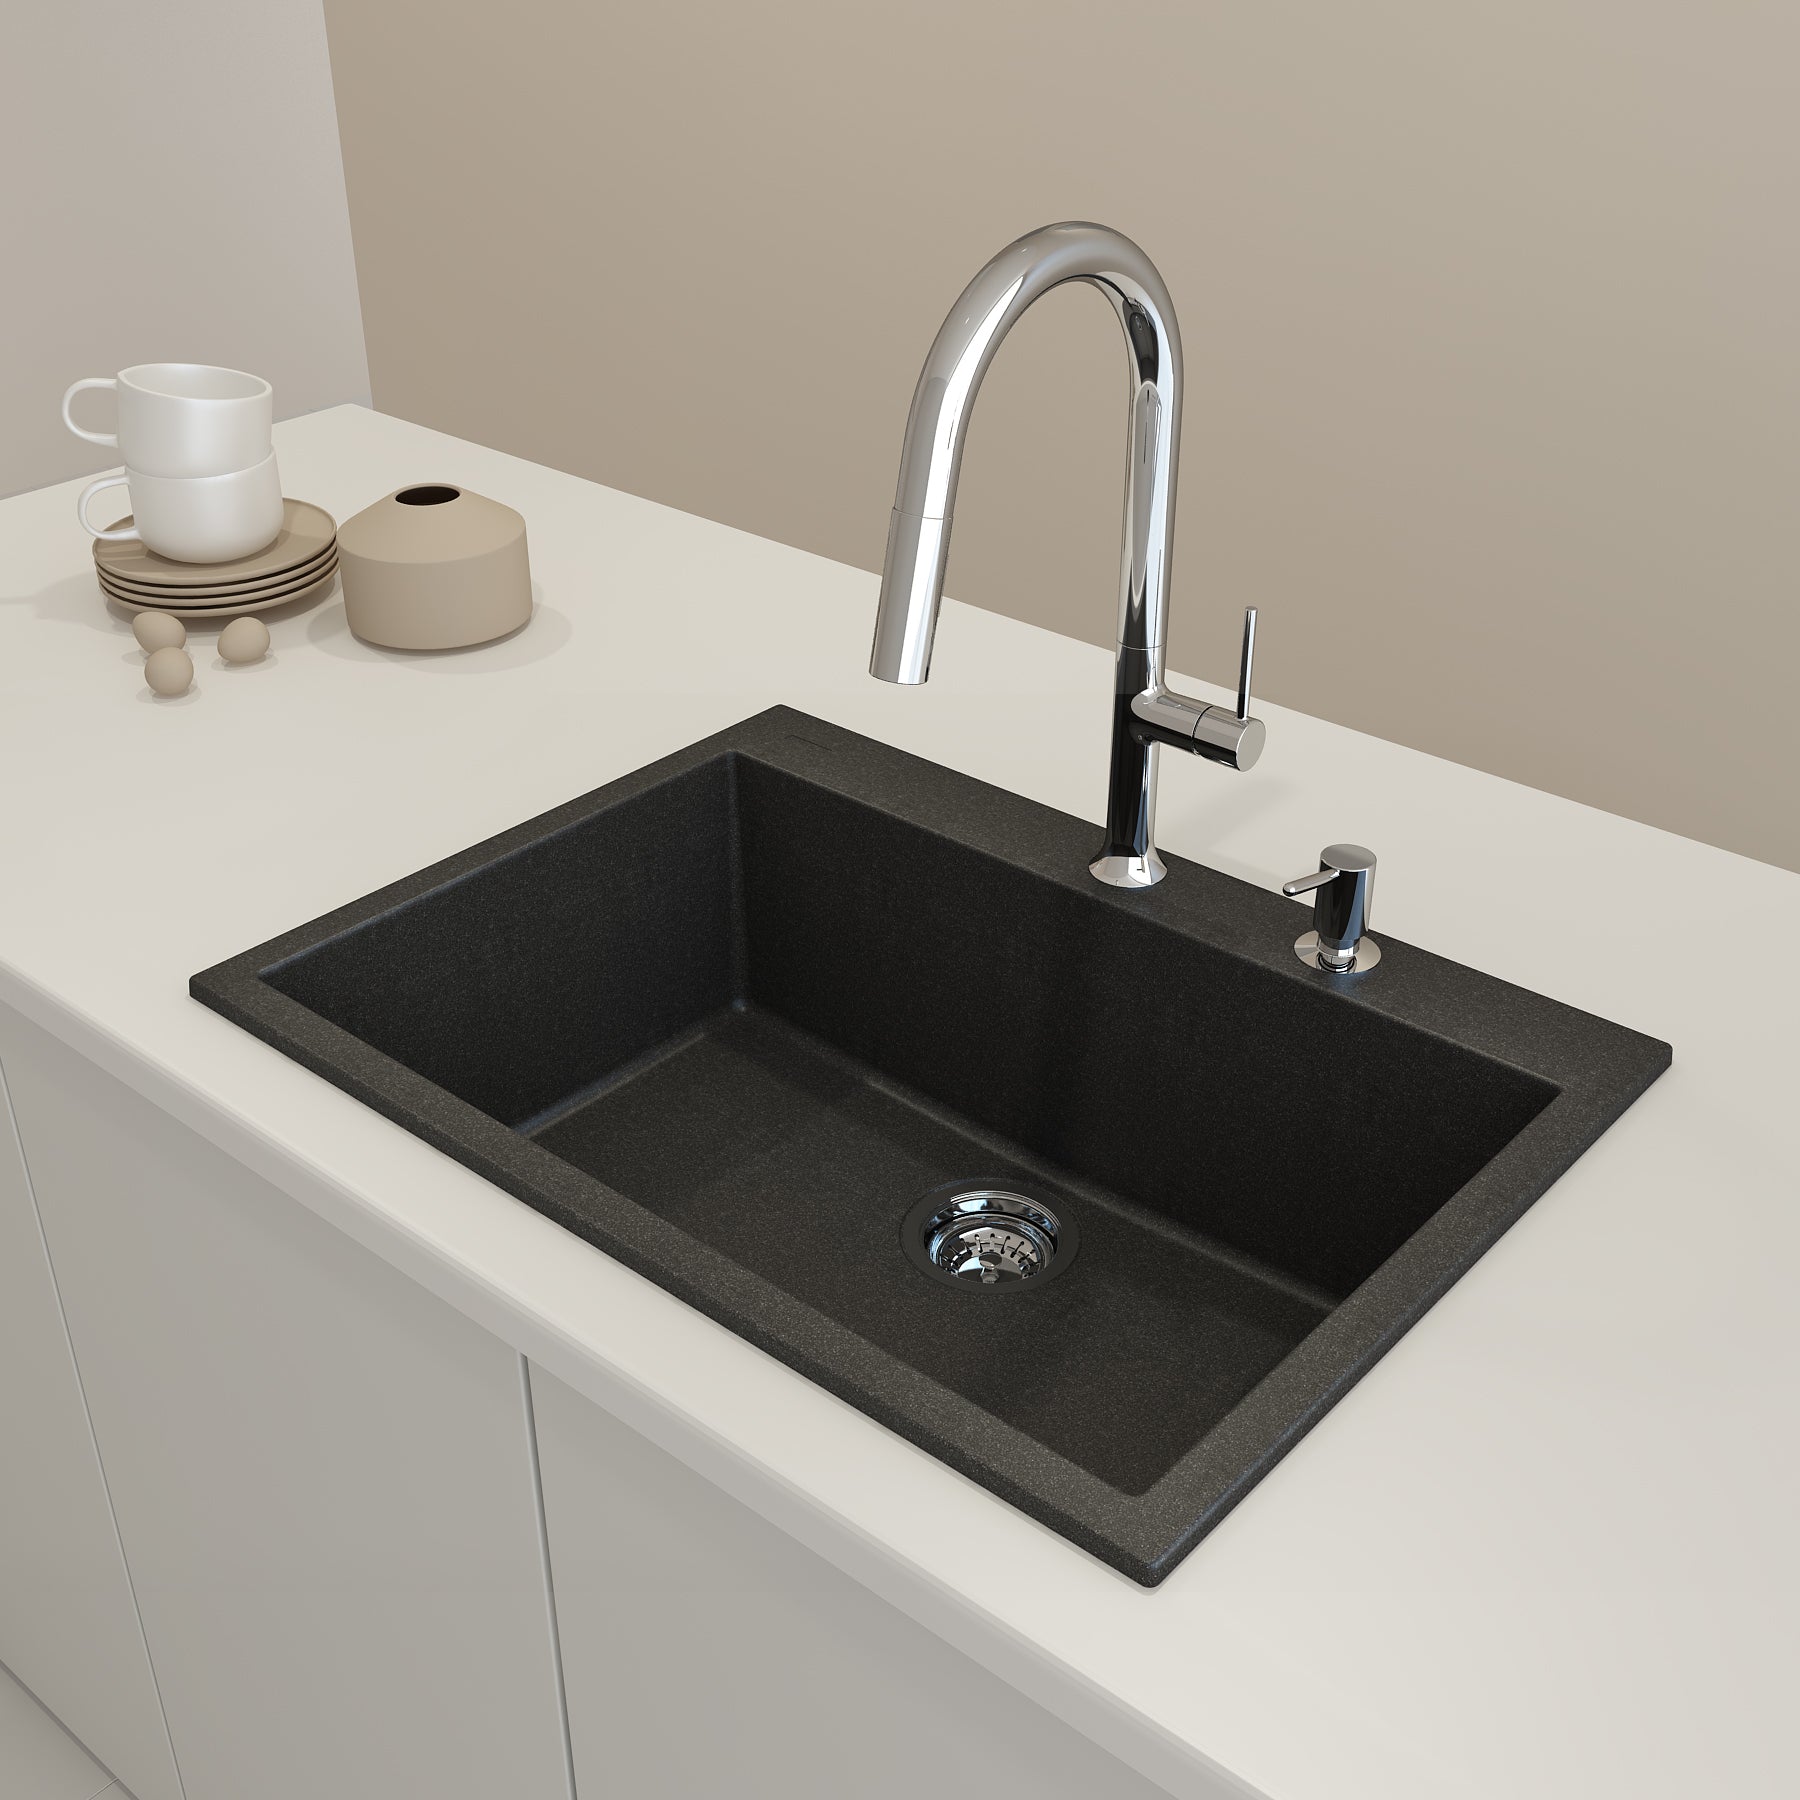 Bocchi 27" Dual-Mount Single Bowl Composite Kitchen Sink in Metallic Black